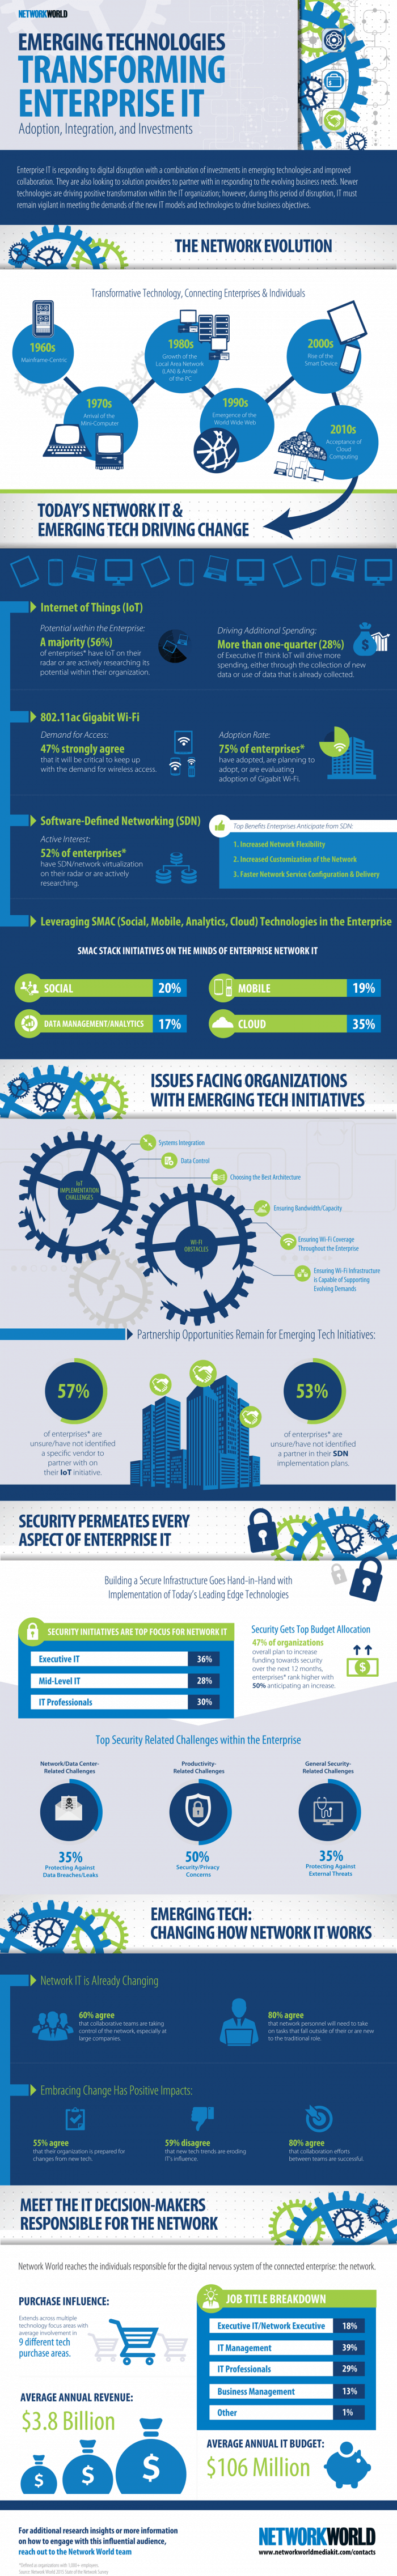 Emerging Technologies Transforming Enterprise IT Infographic